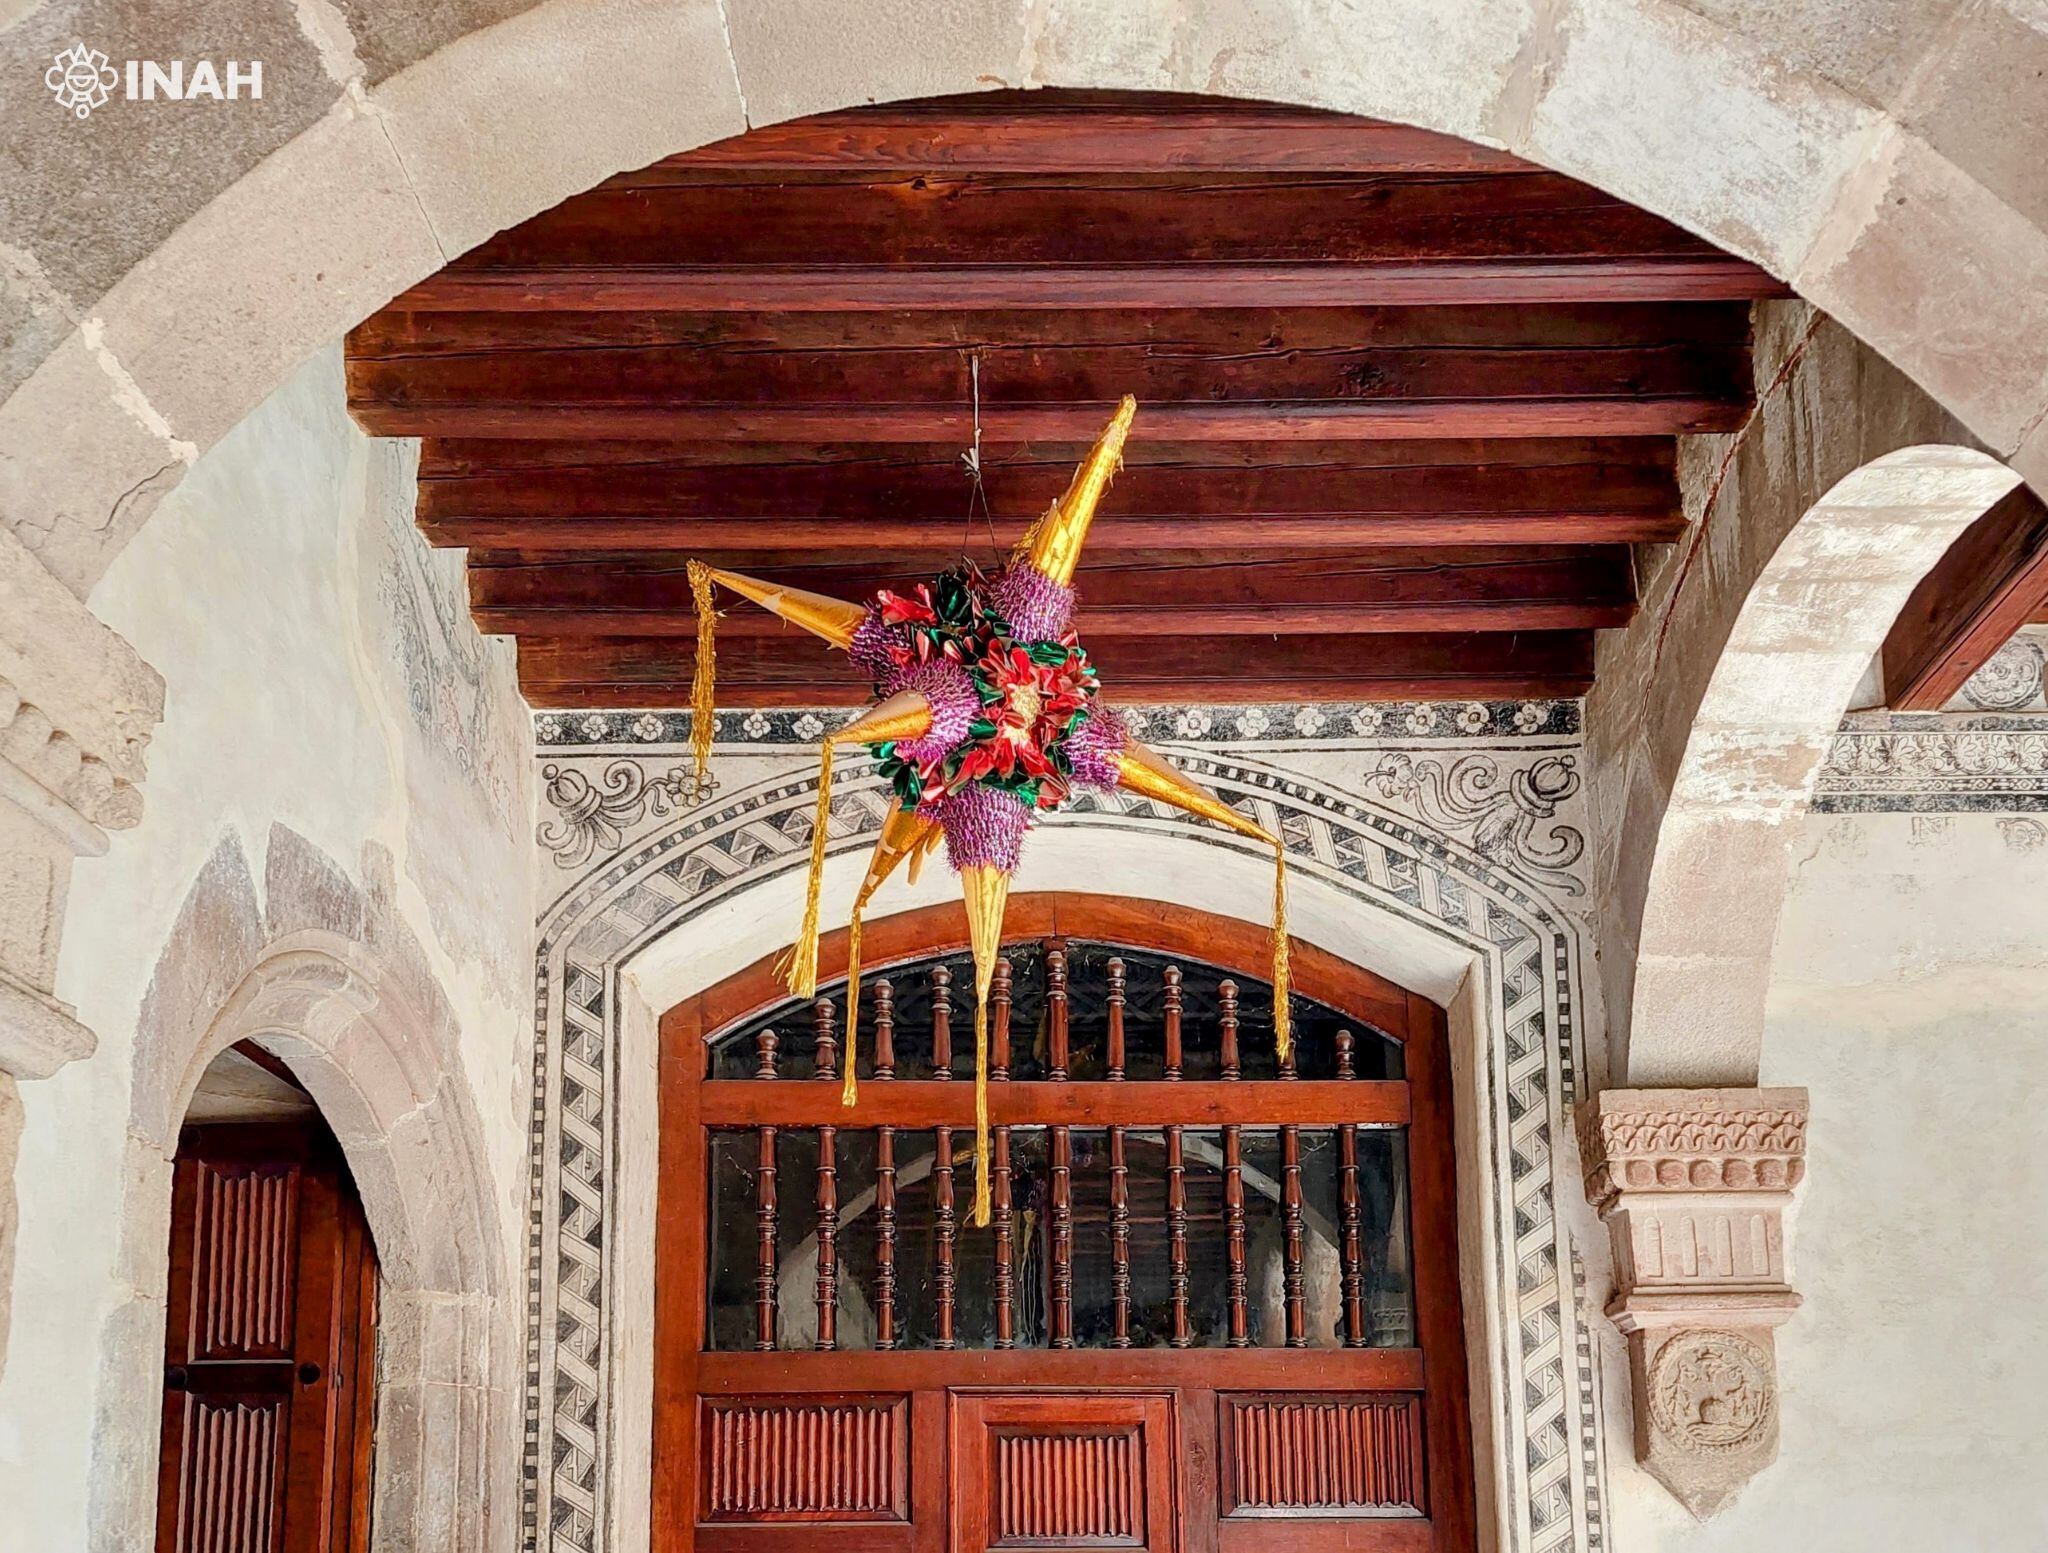 Piñata de Acolman (INAH)